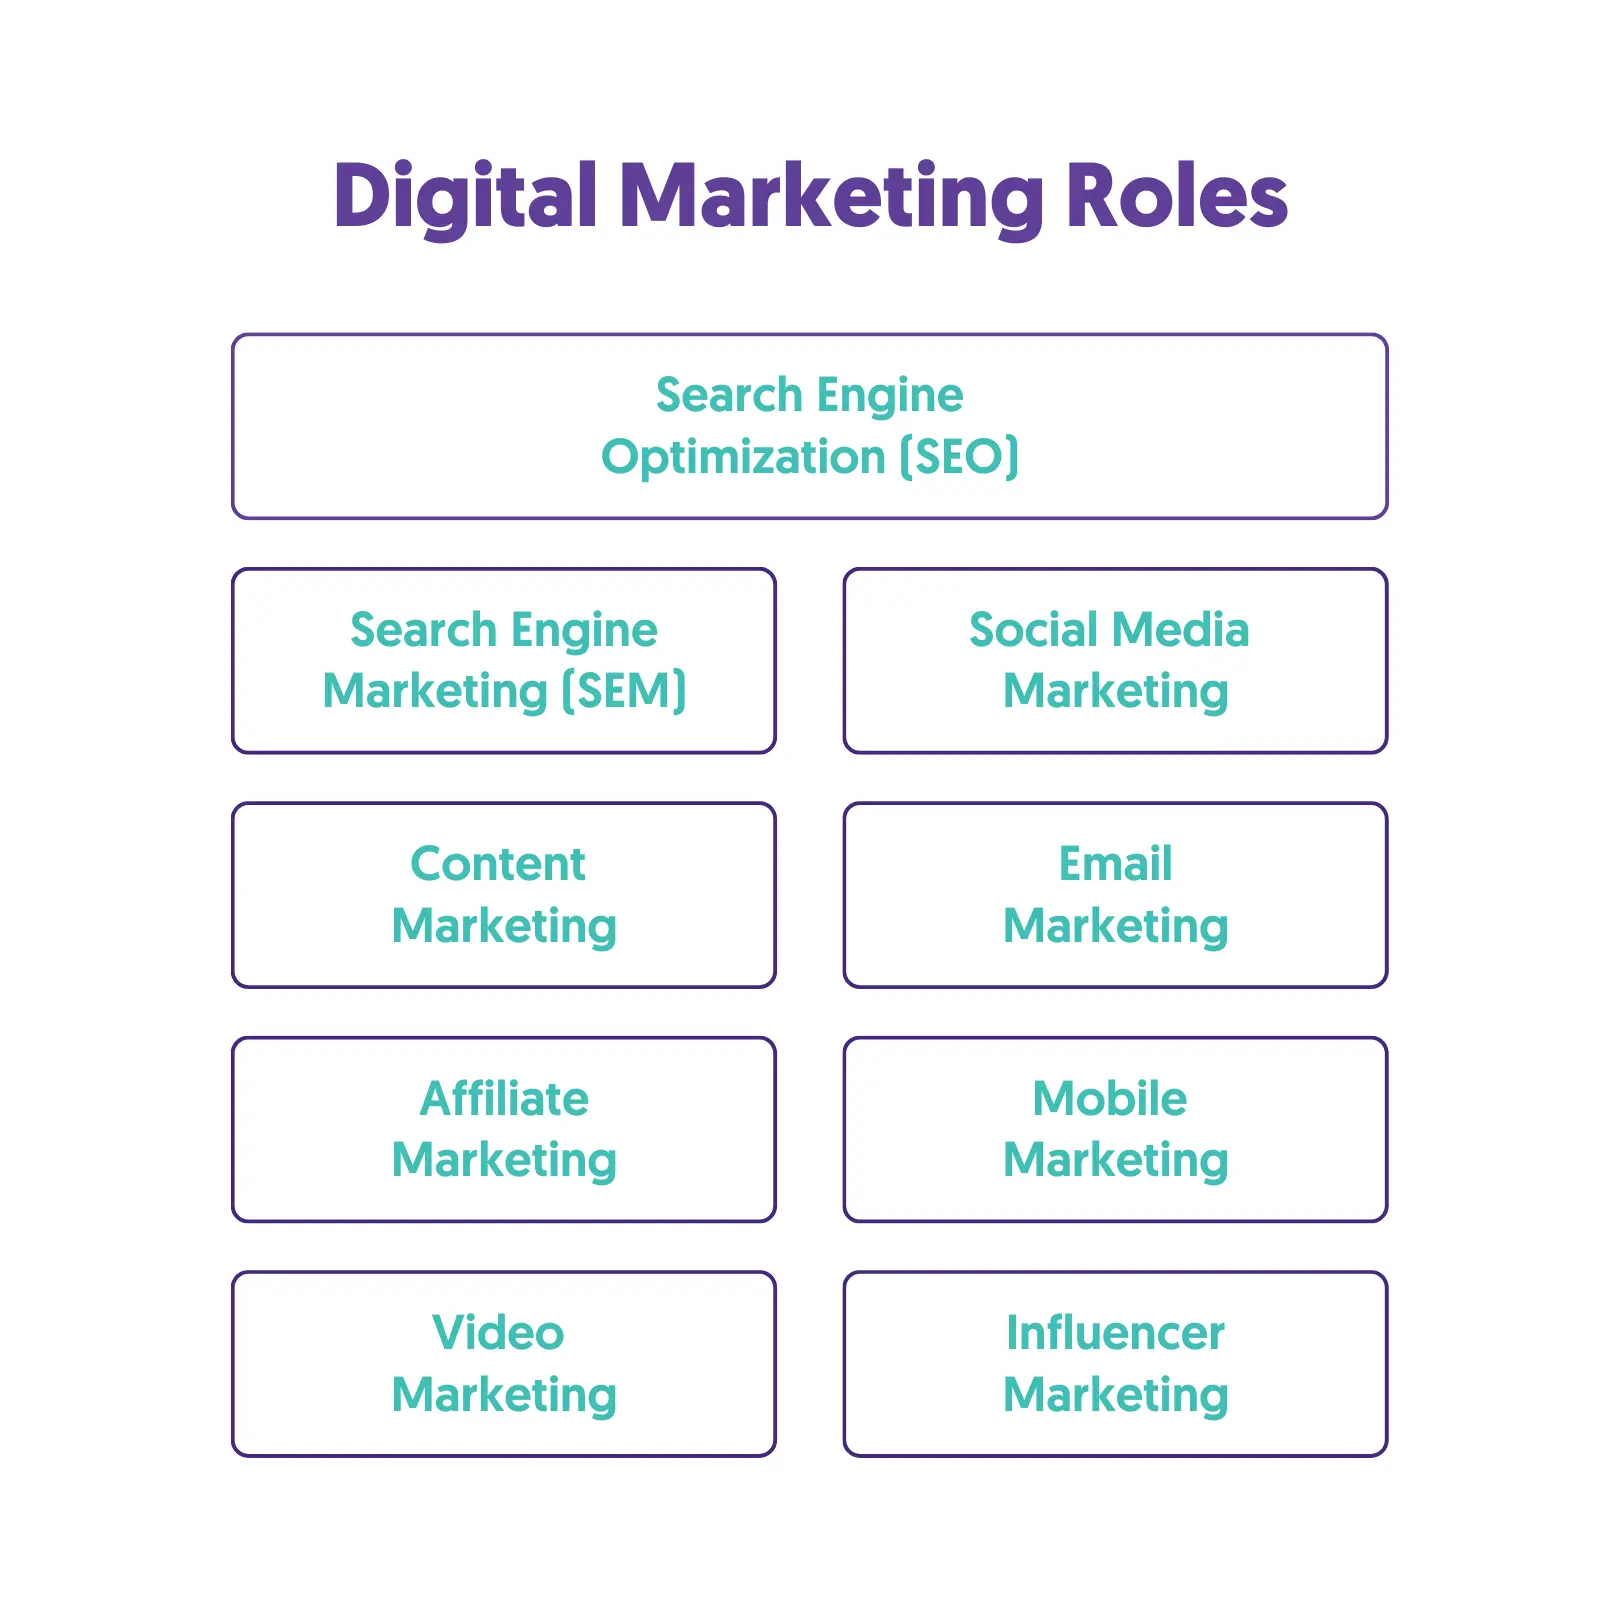 Digital Marketing Roles